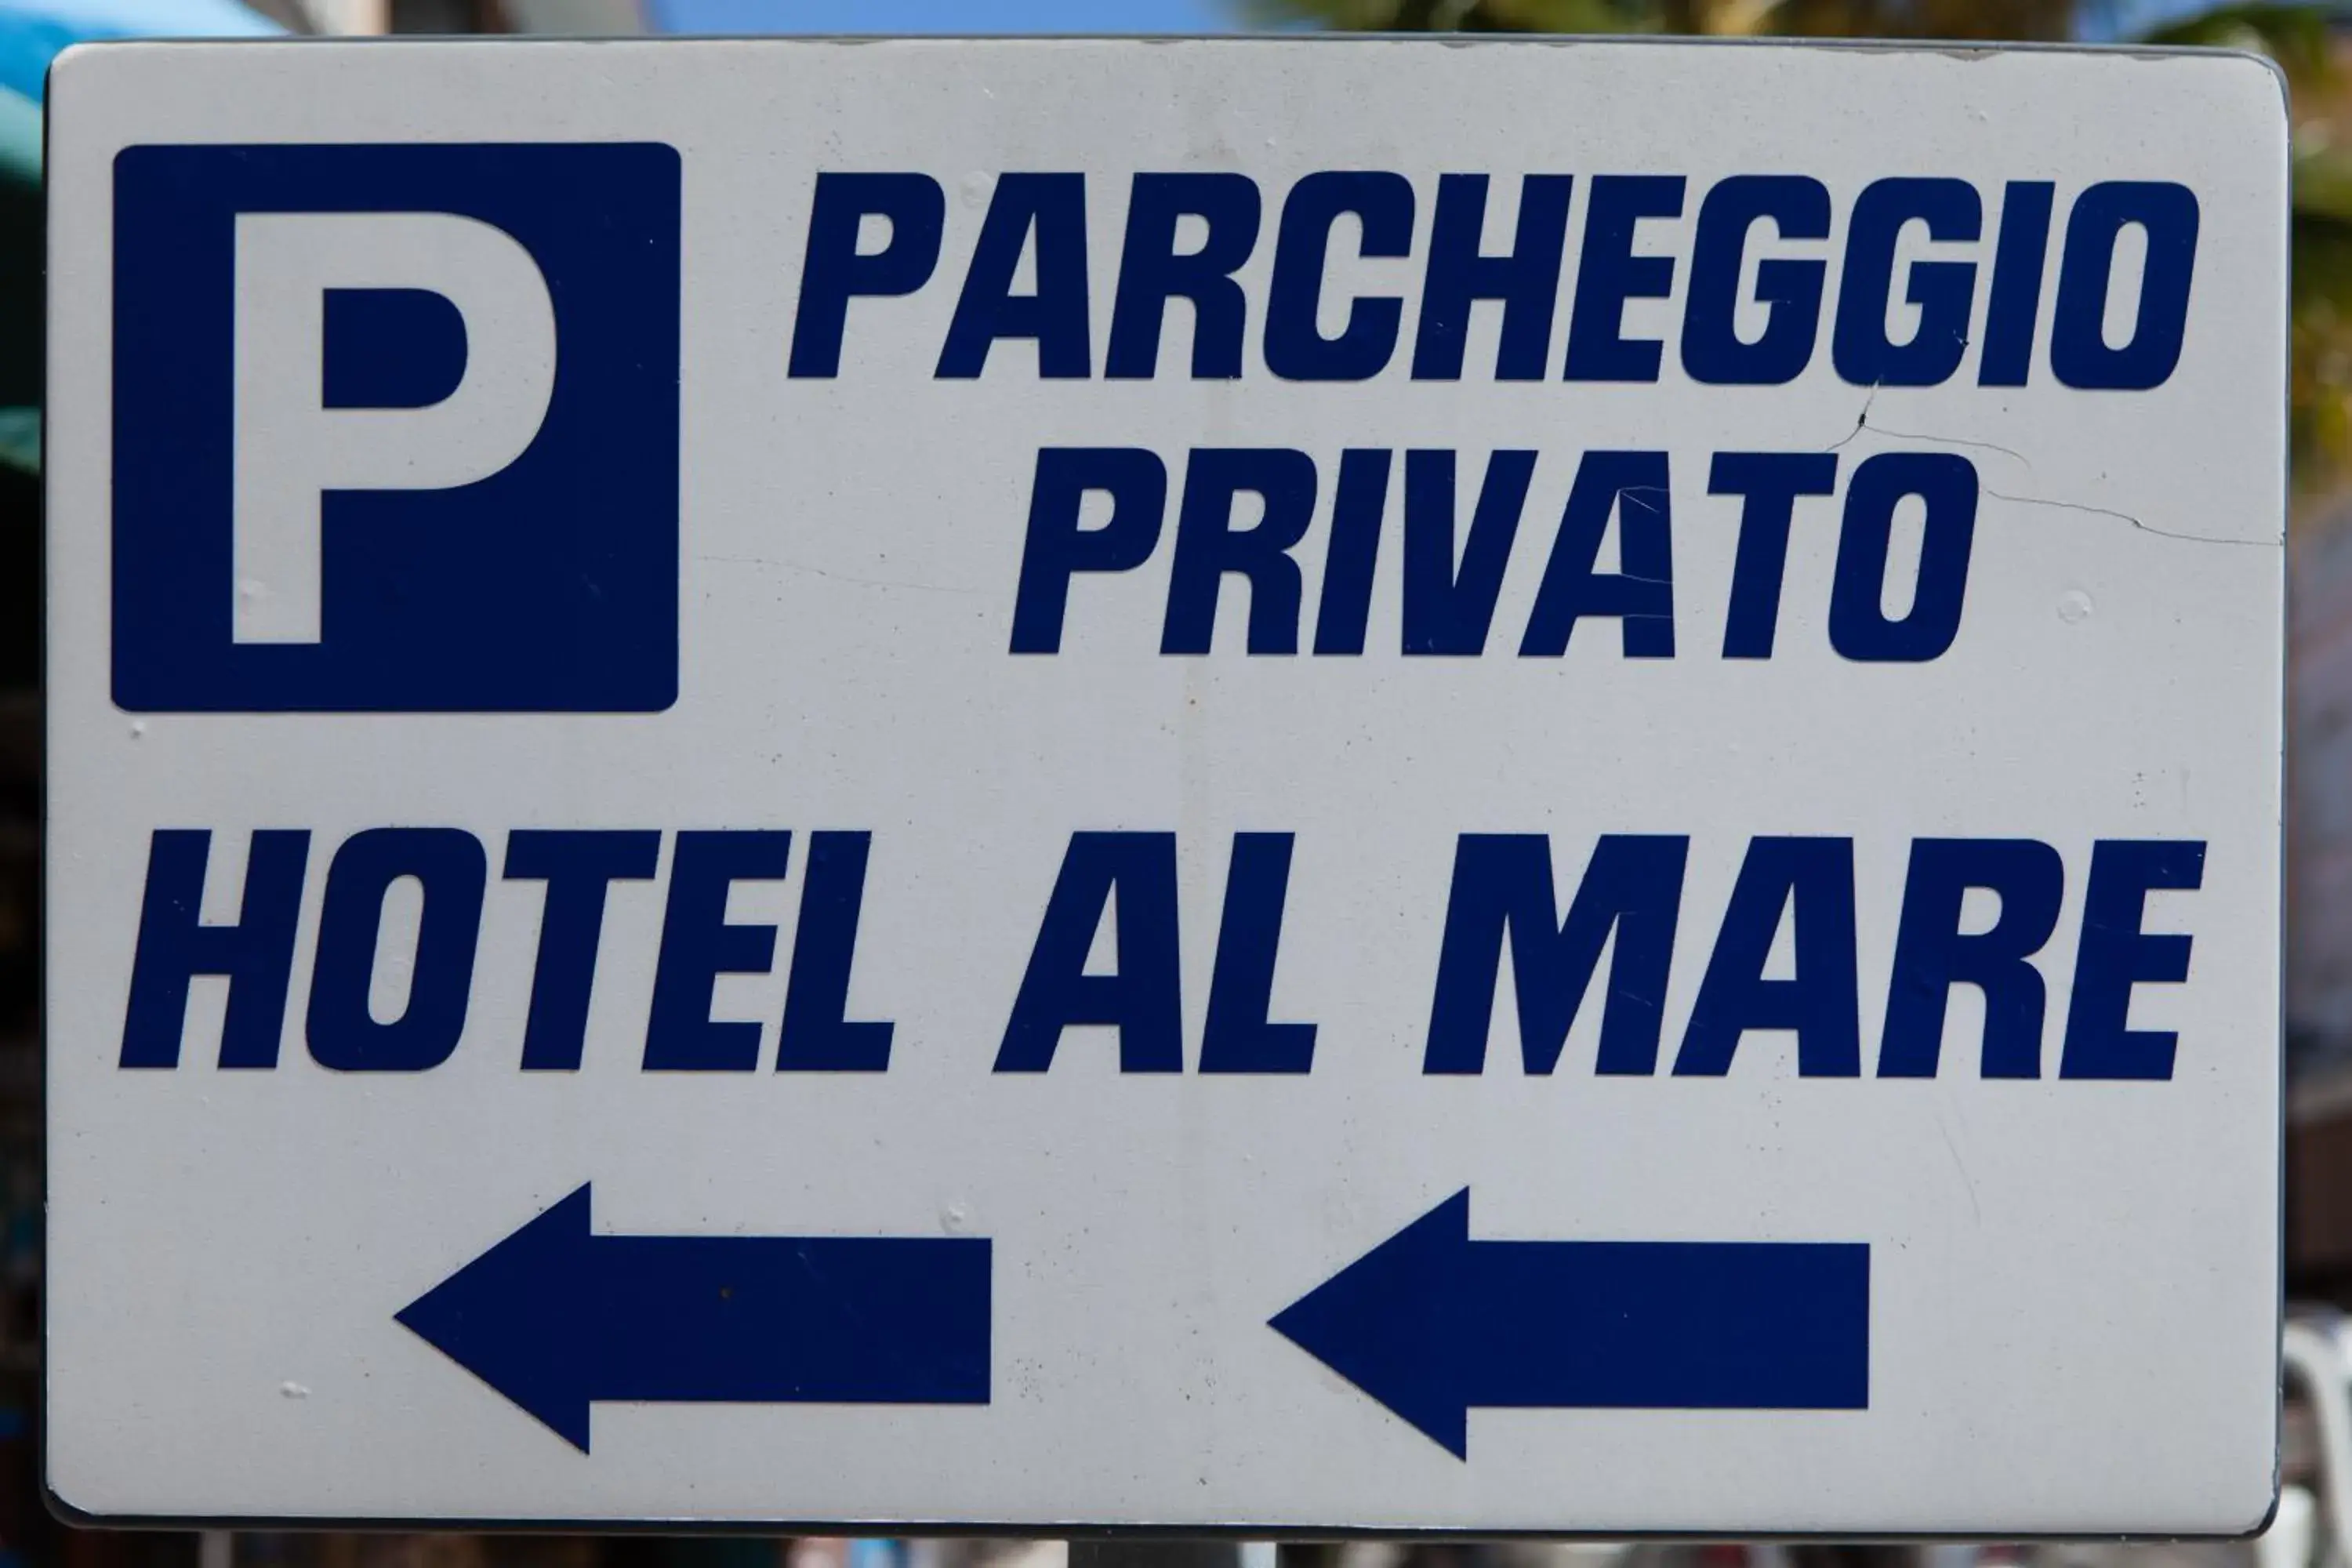 Property logo or sign in Hotel Al Mare